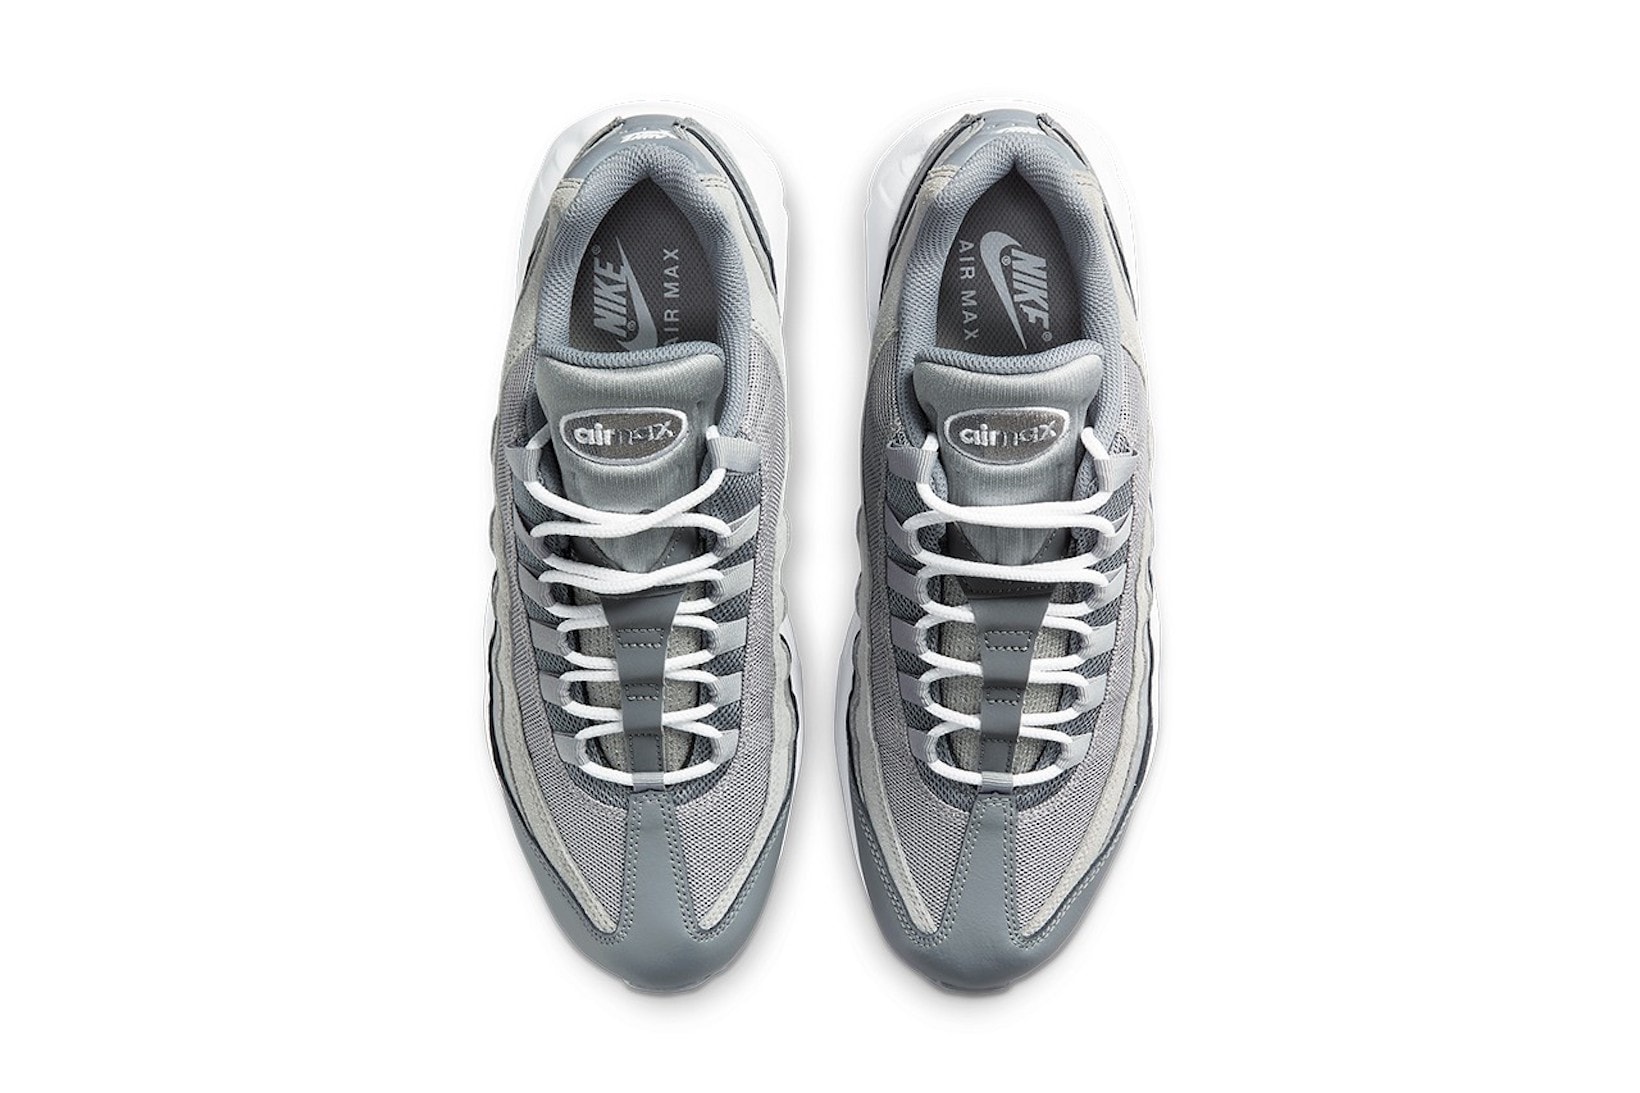 nikes air max 95 am95 sneakers medium cool grey colorway footwear kicks shoes aerial top view insole